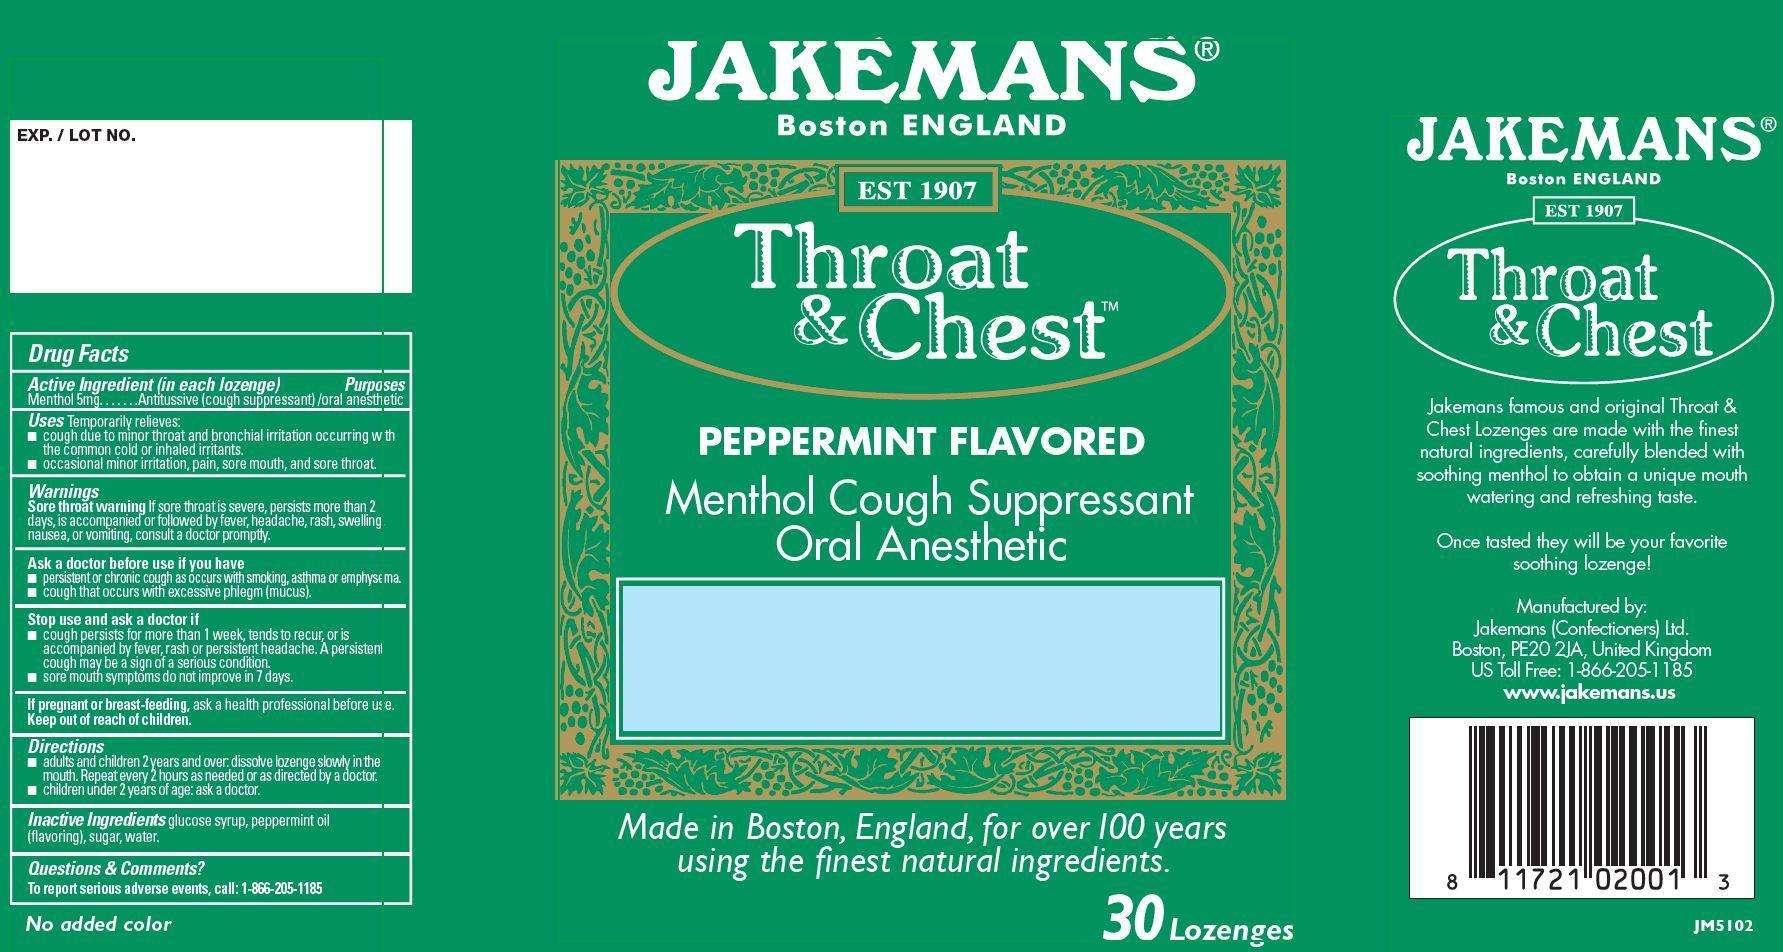 Jakemans Peppermint